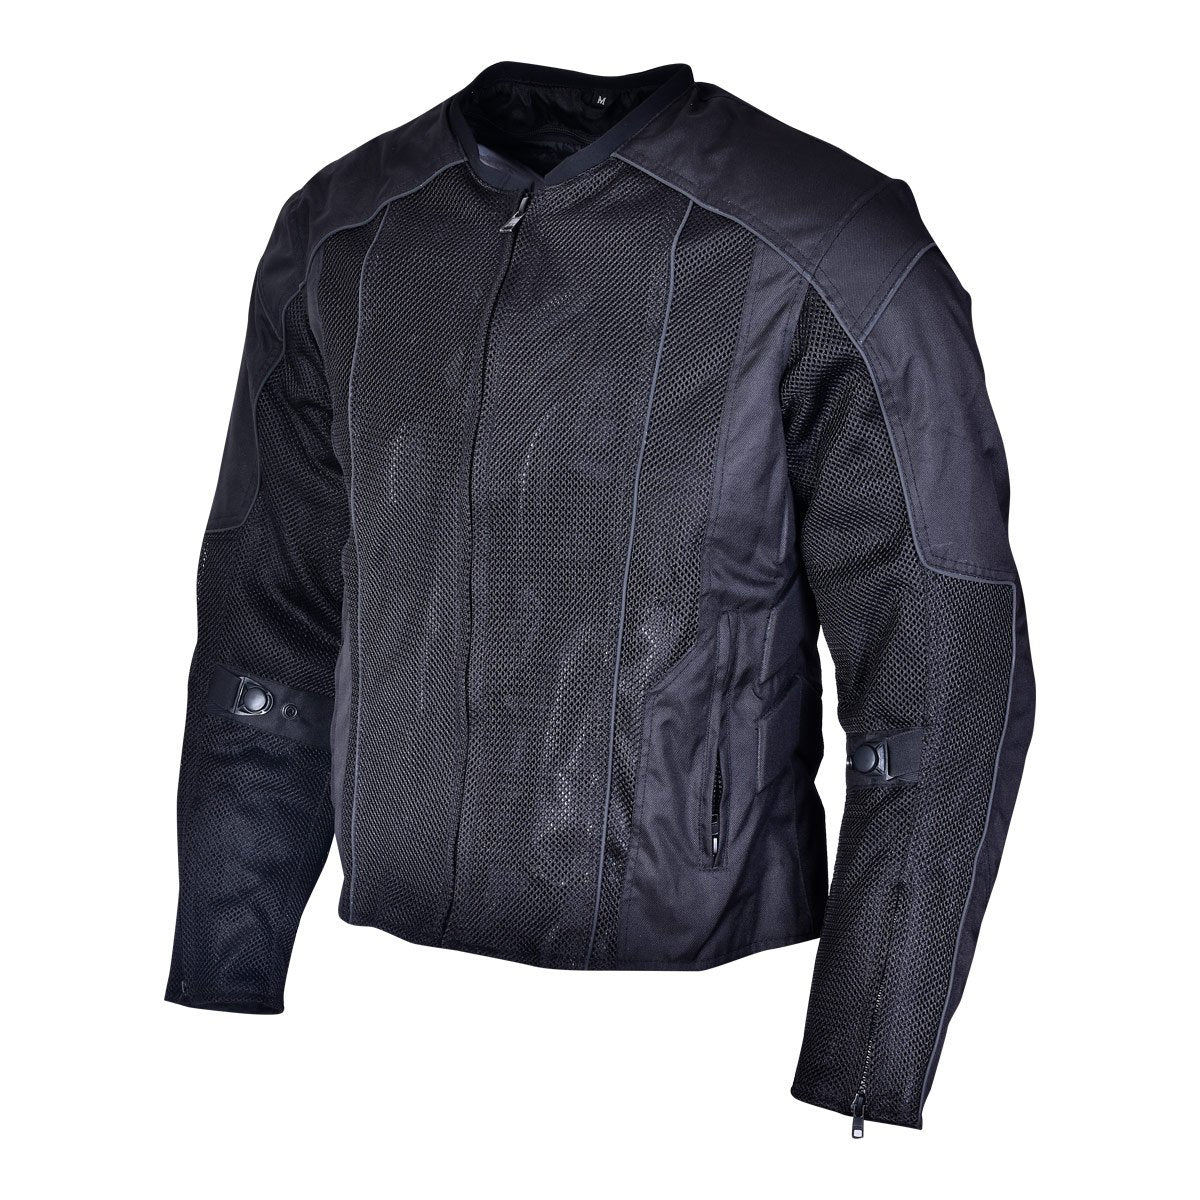 Advanced 3-Season Mesh/Textile CE Armor Motorcycle Jacket